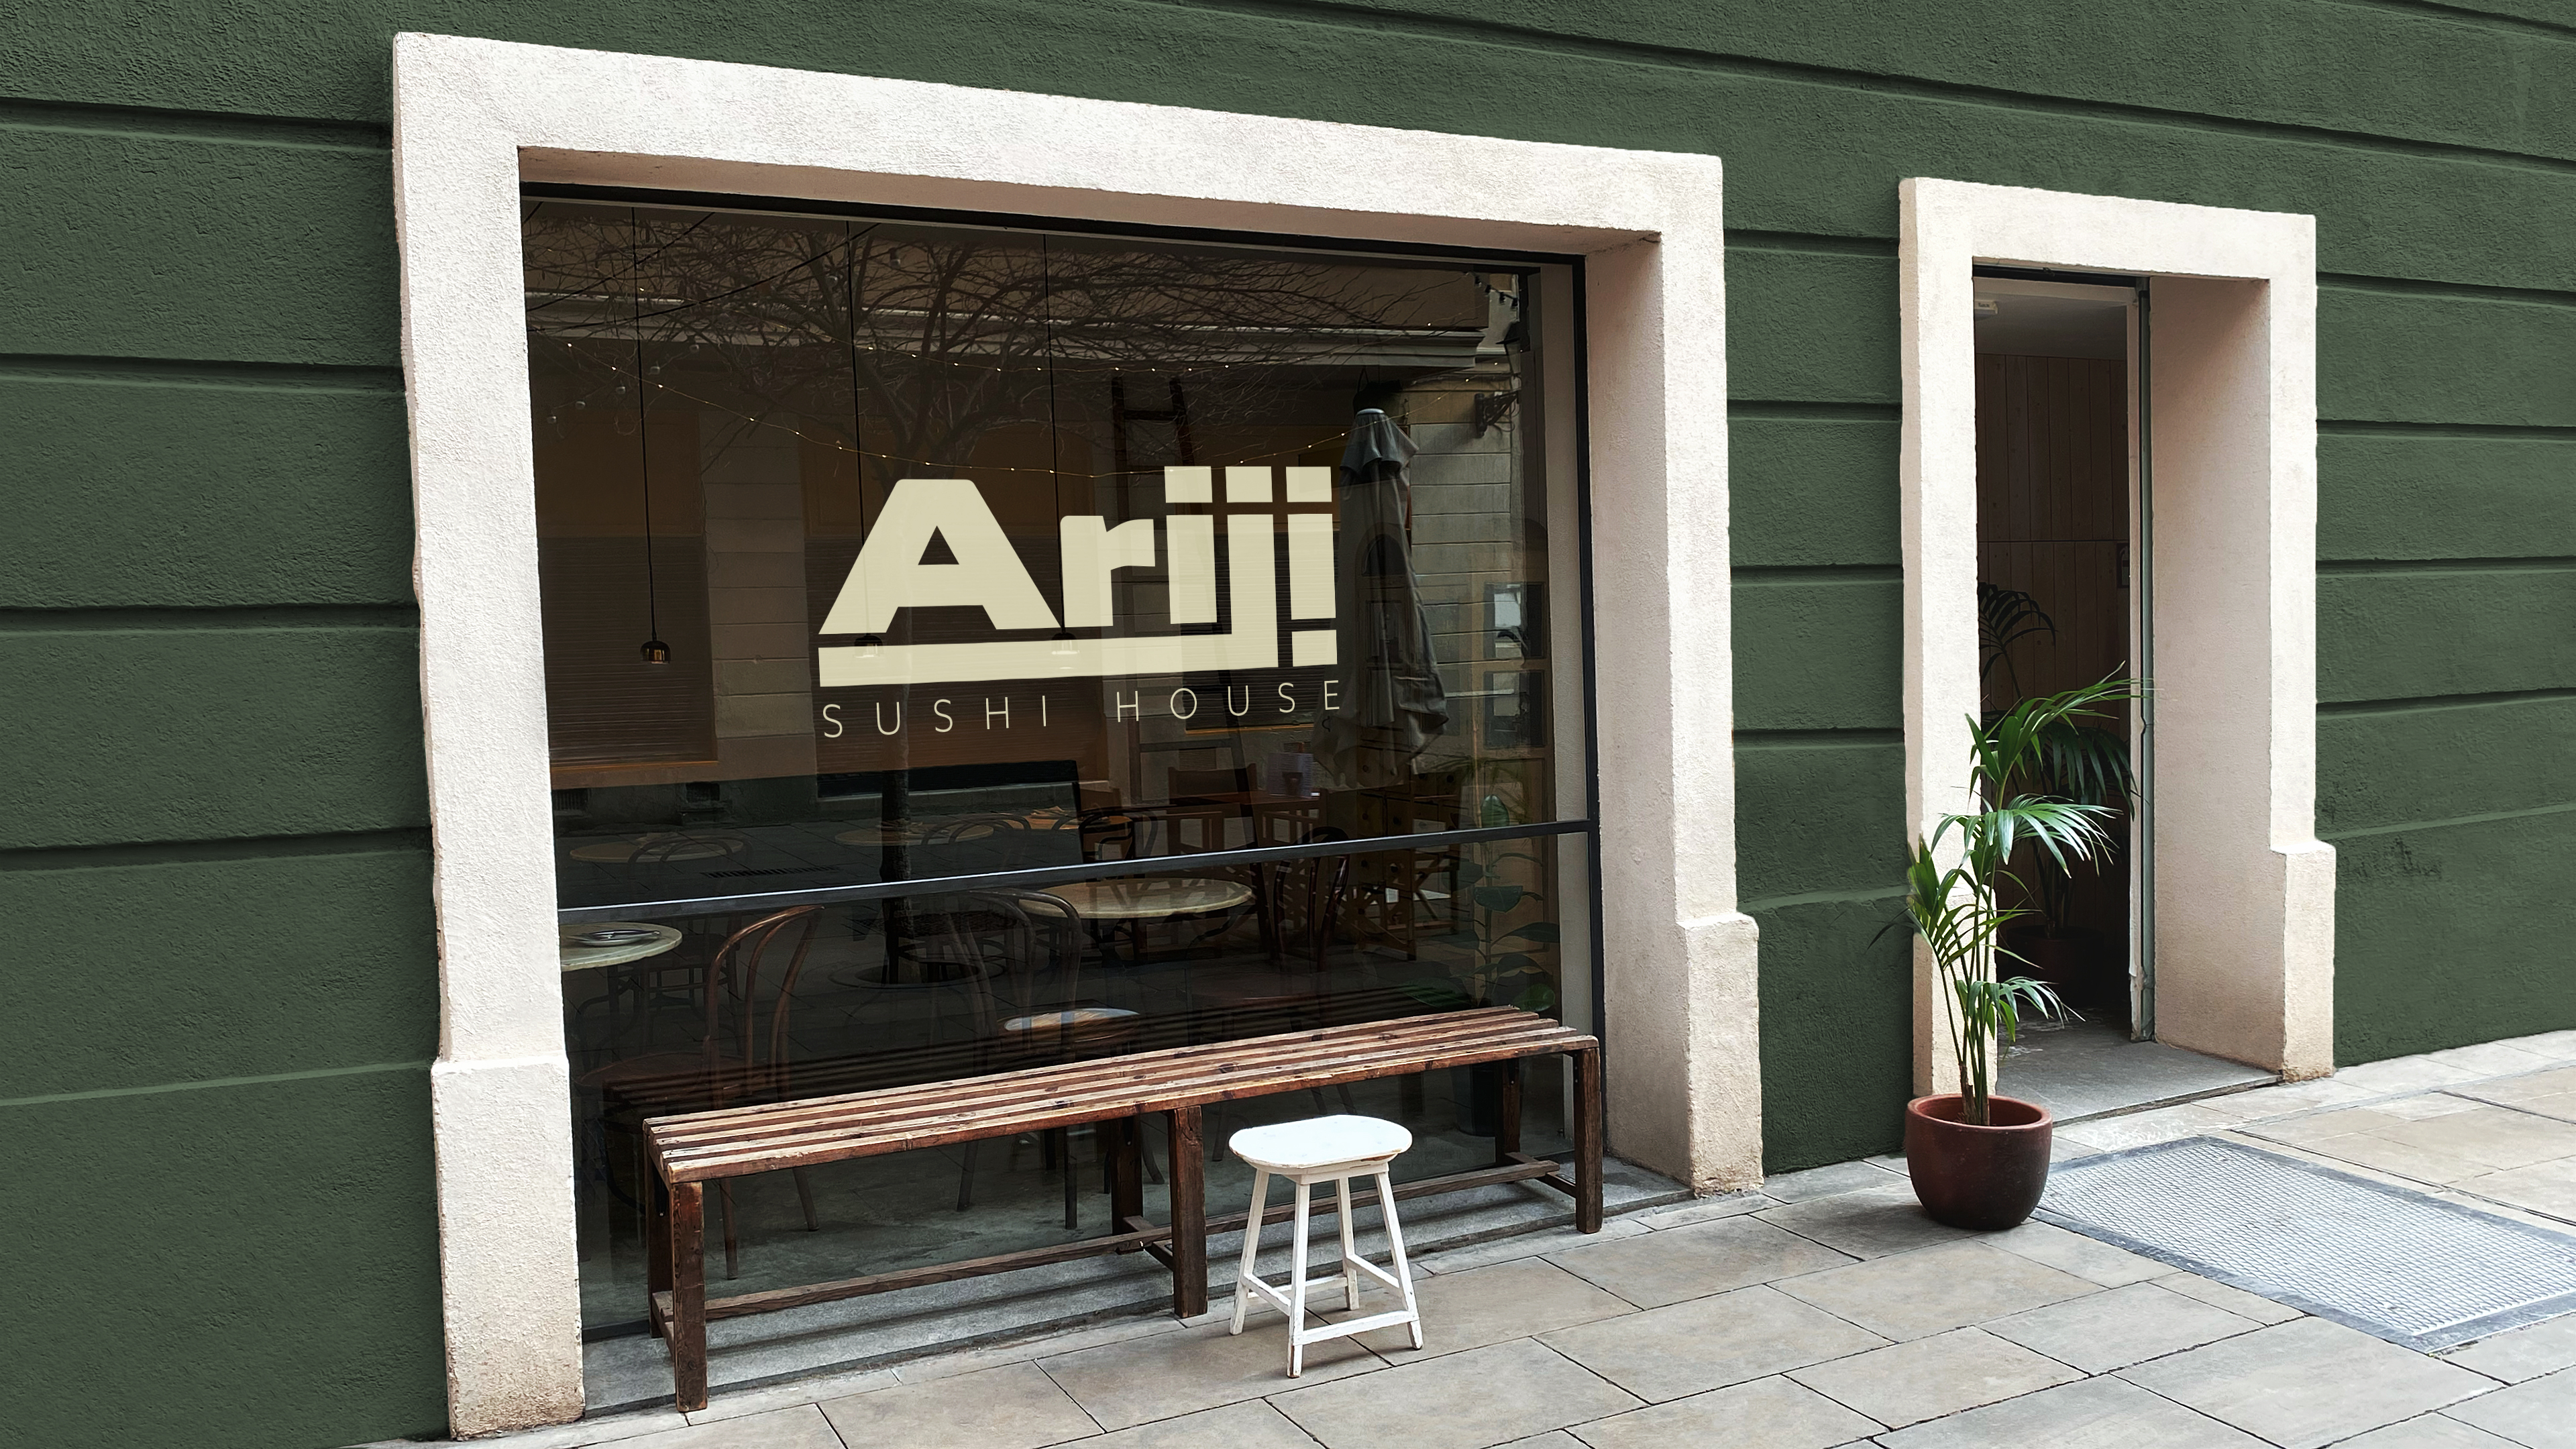 Storefront of Ariji restaurant with ariji logo on window